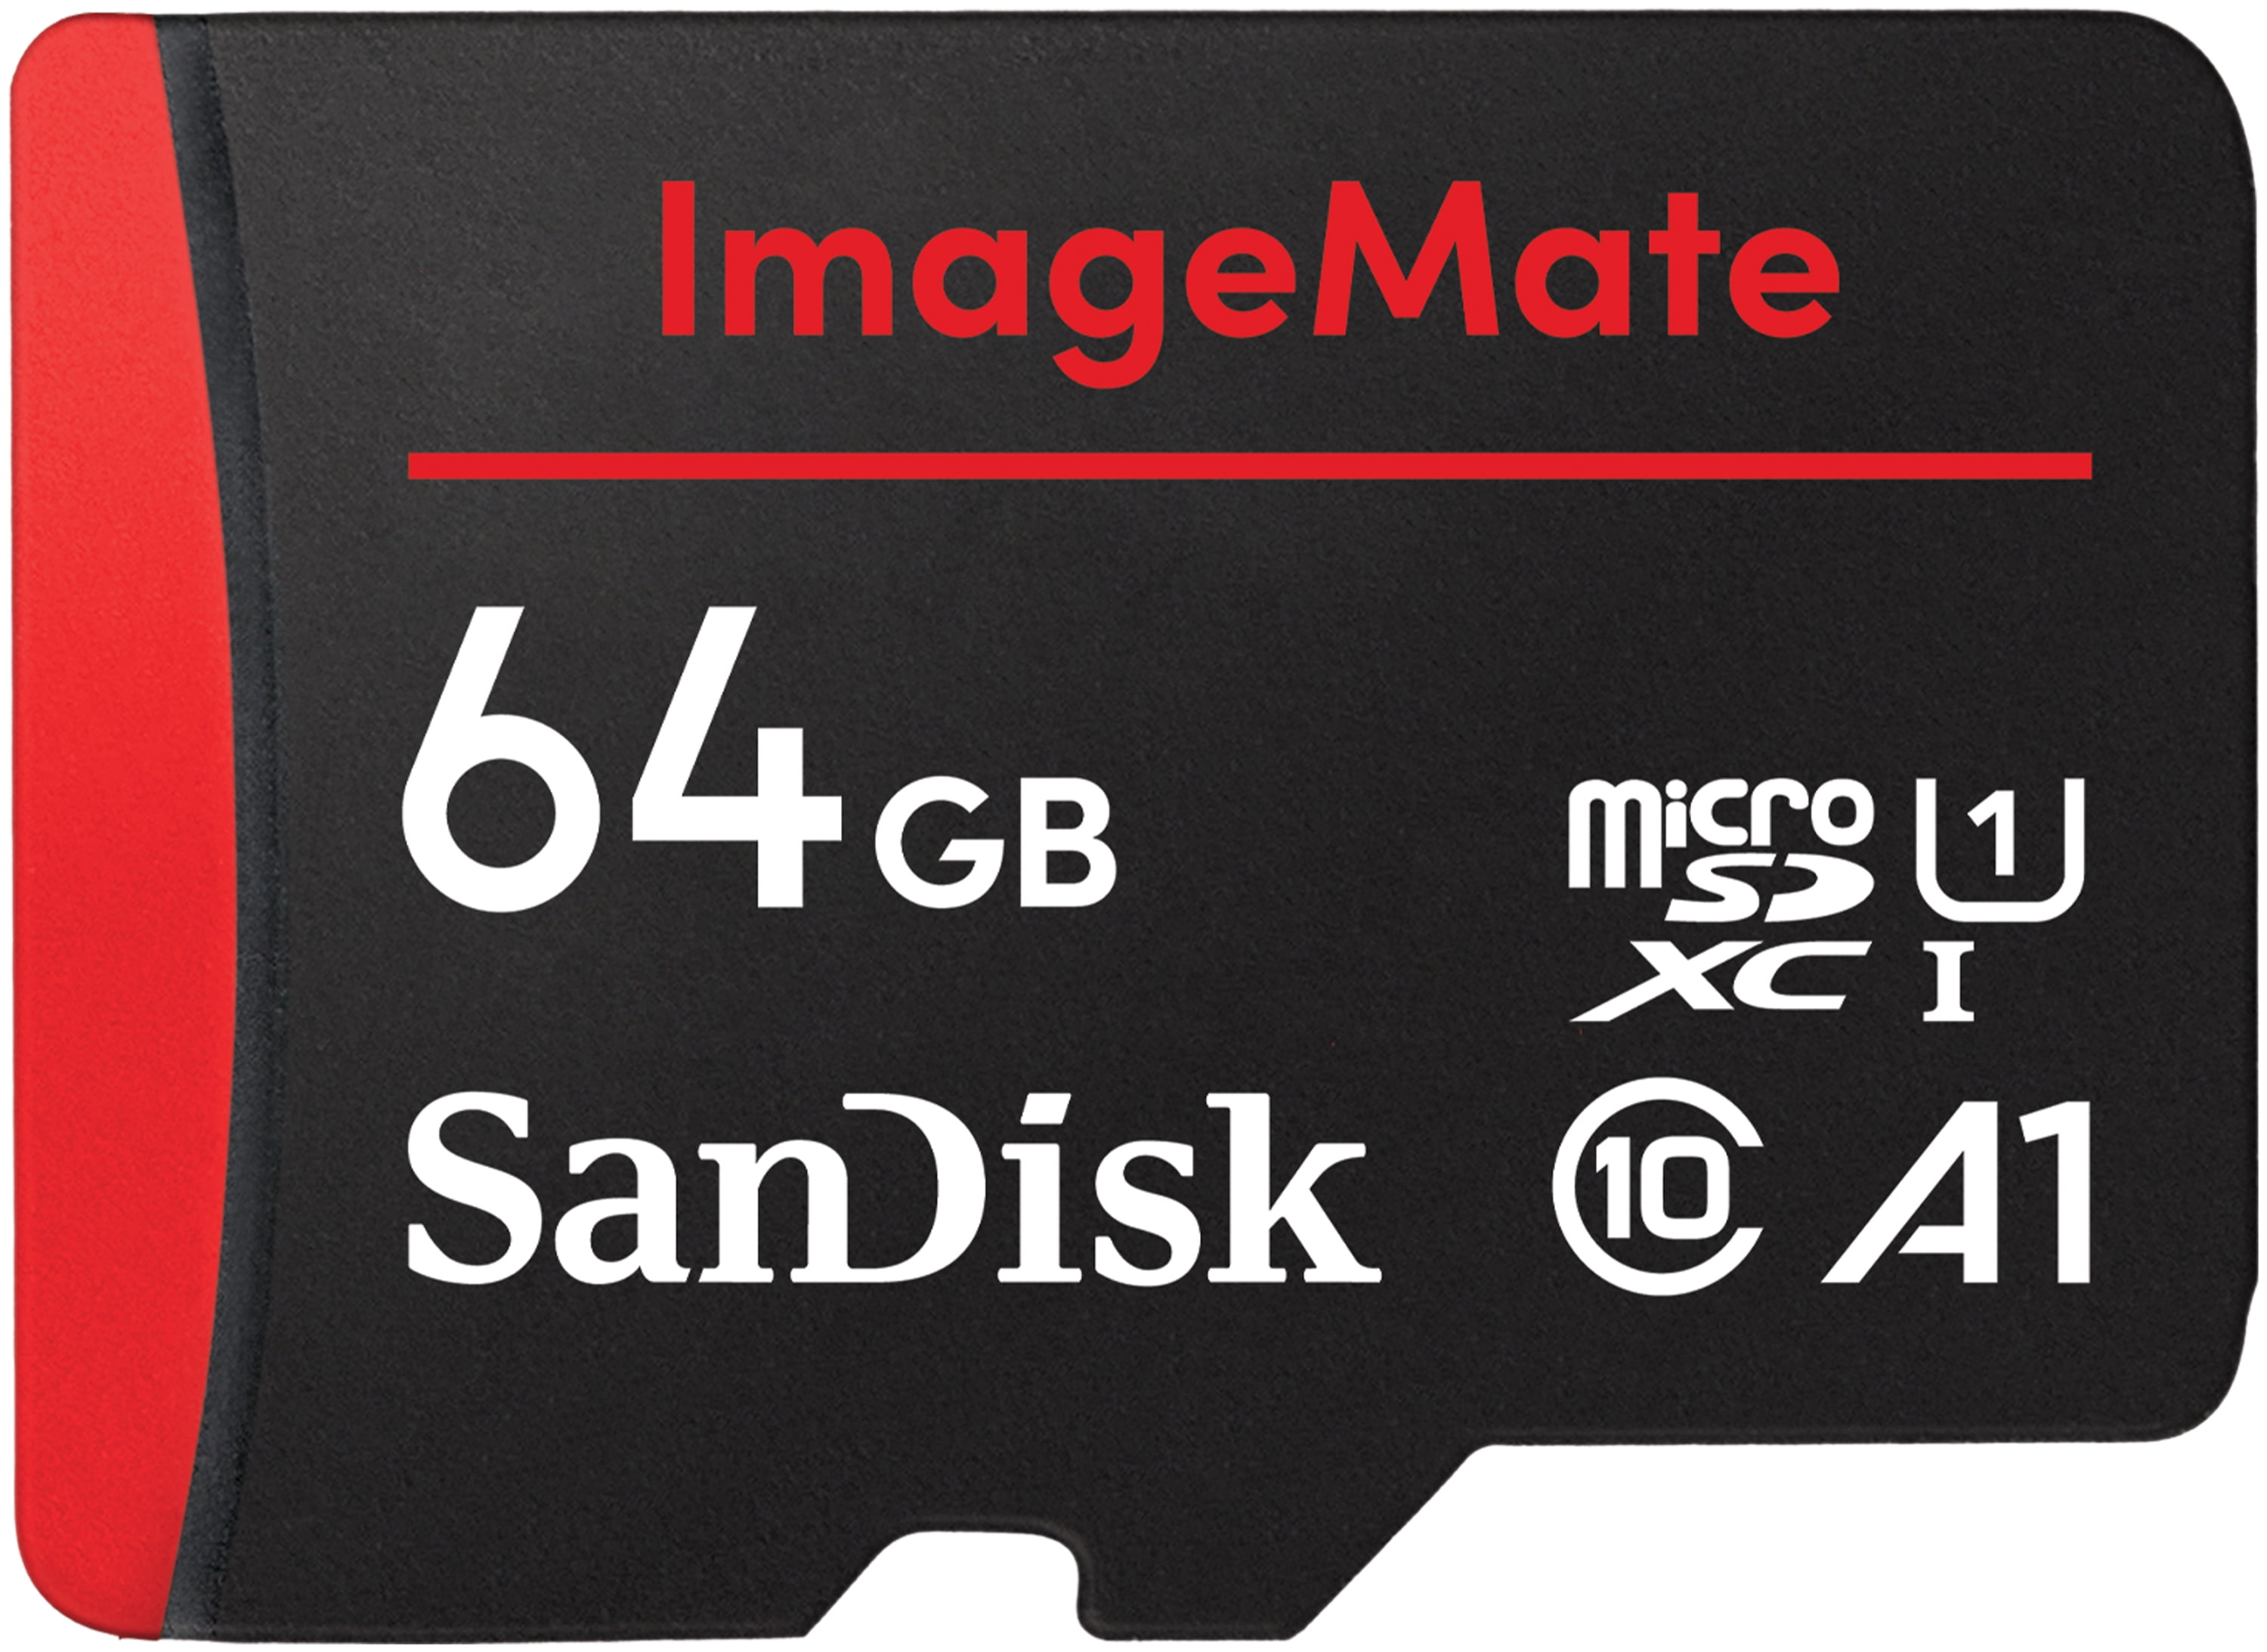 SanDisk 64GB Image Mate MicroSDXC UHS-1 Memory Card with Adapter - C10, U1, HD, A1 Micro SD Card - Walmart.com